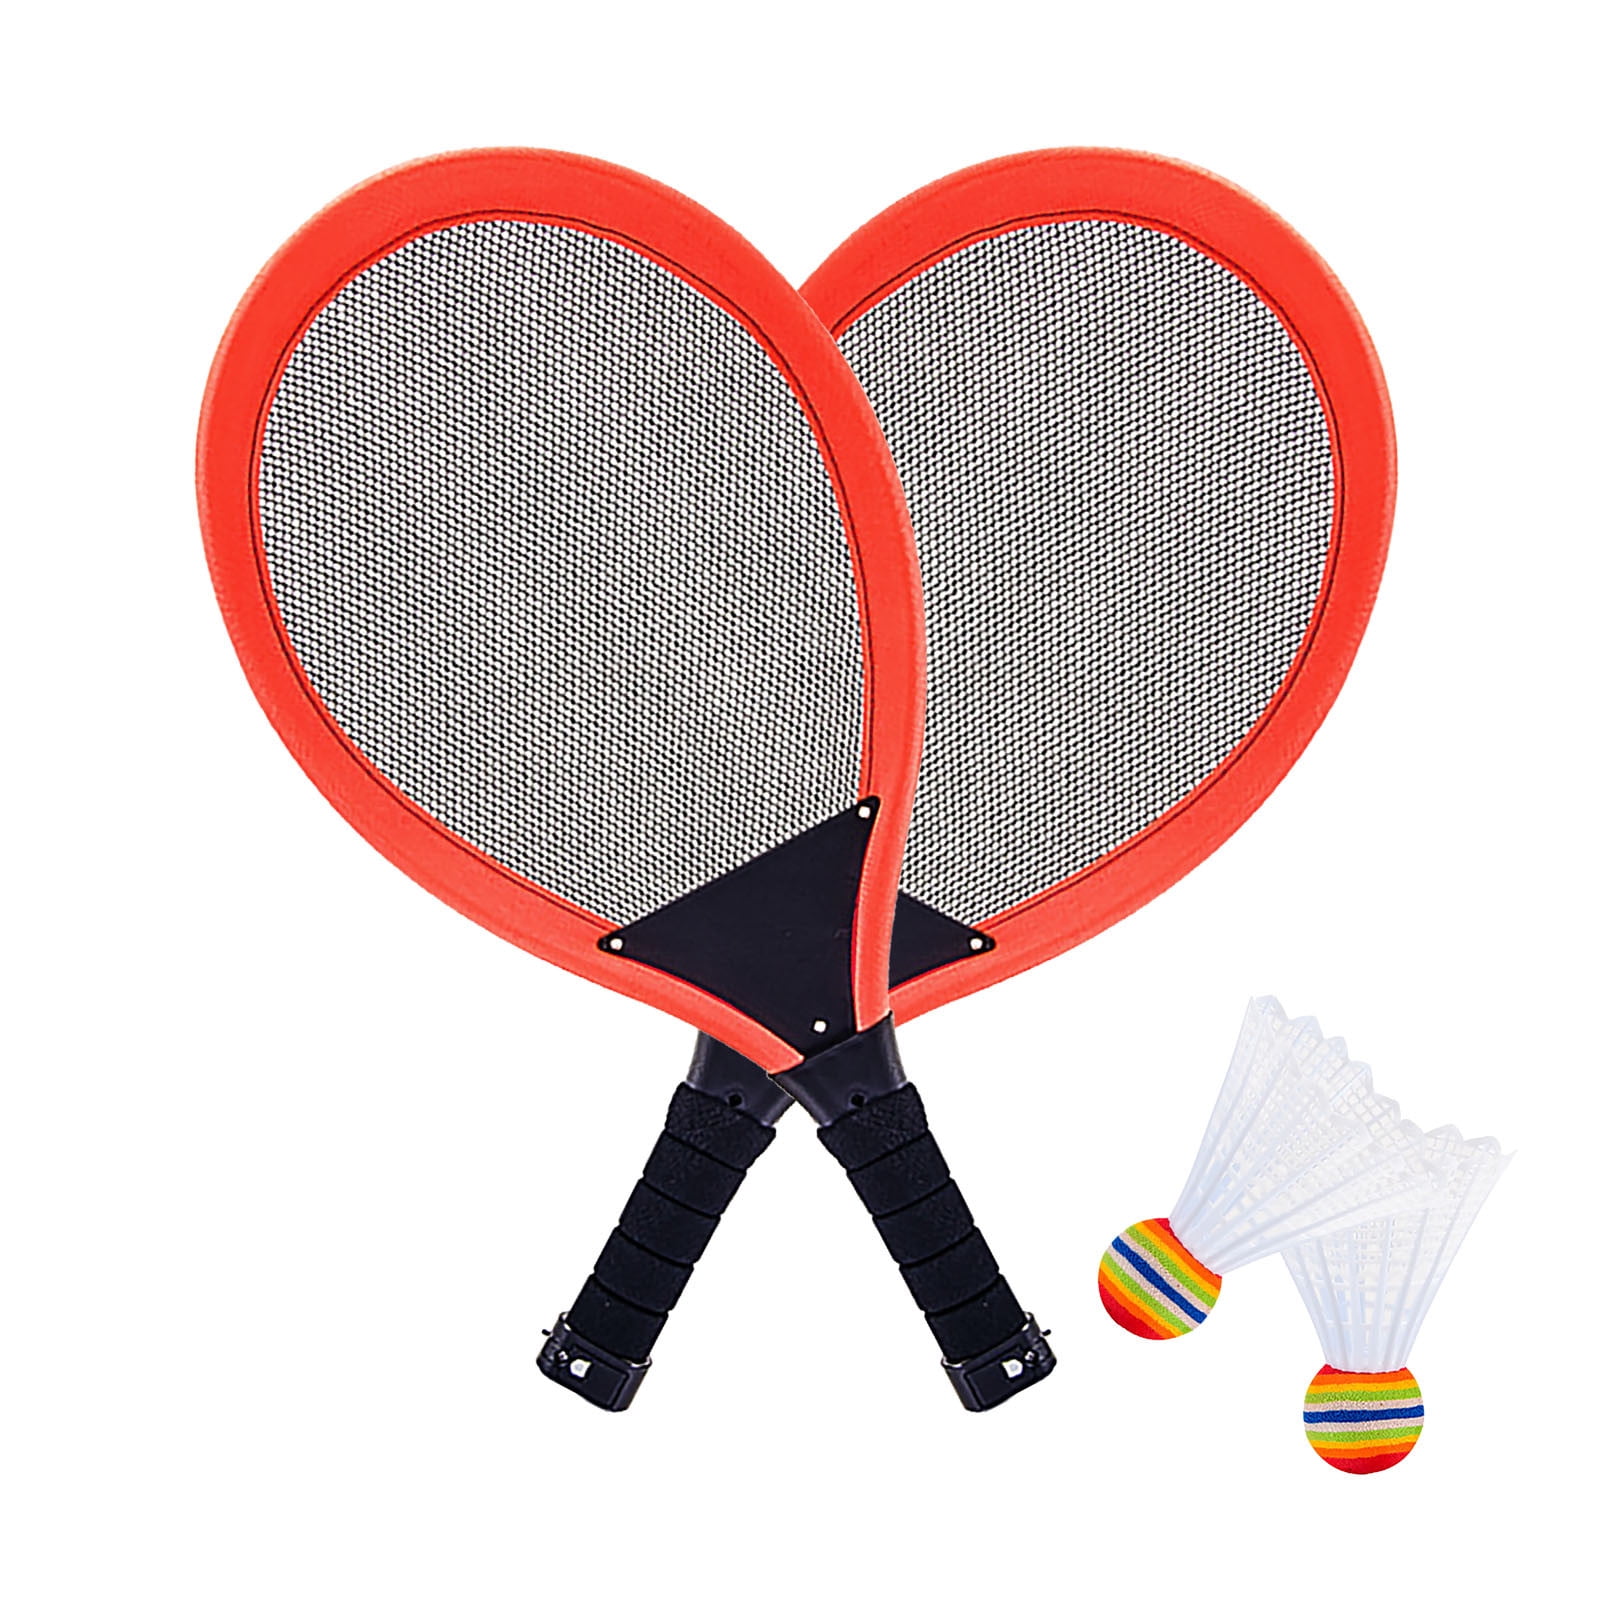 Details about   Professional Badminton Racket Tennis Set Kids Adults Outdoor Summer Sports 2pcs 